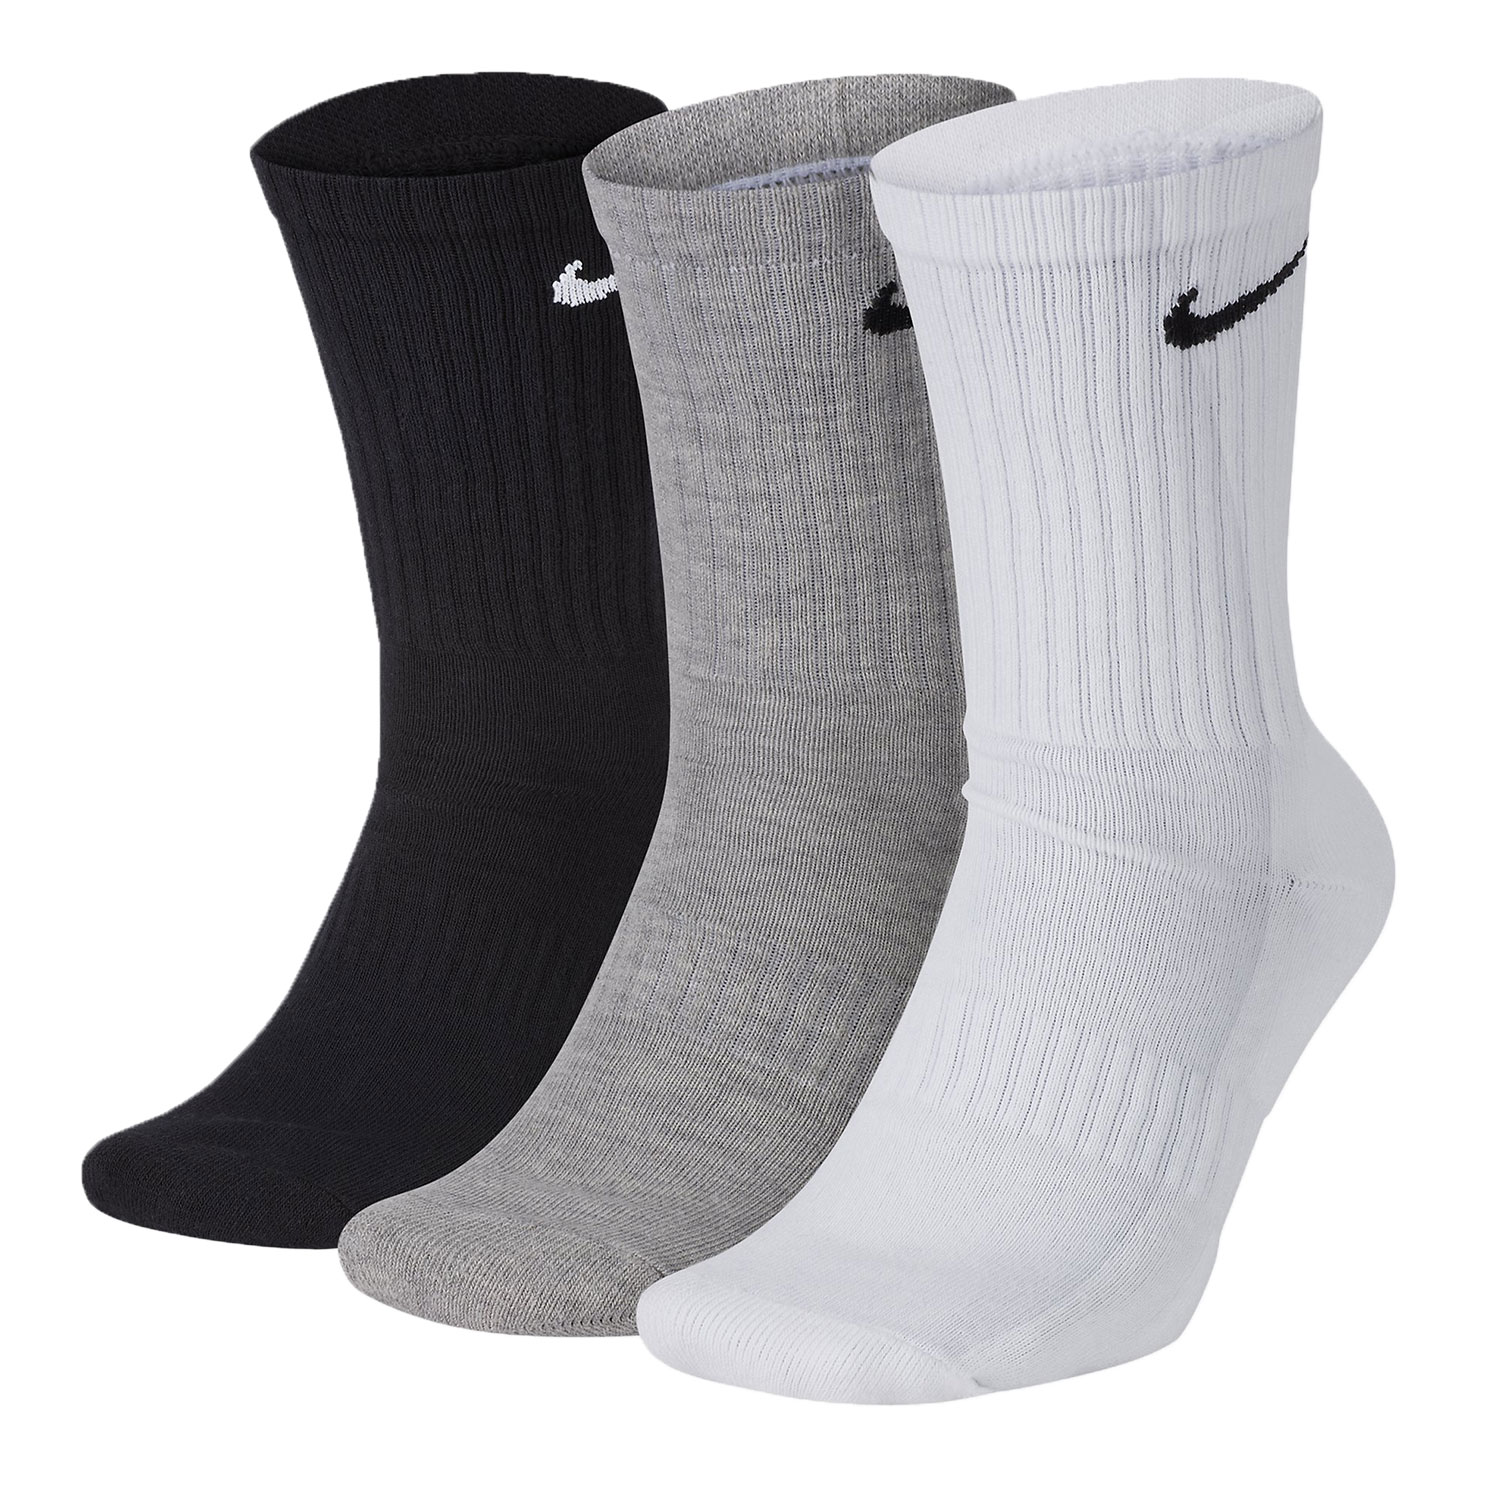 Nike Everyday Cushioned Crew x 3 Socks - Multi Color